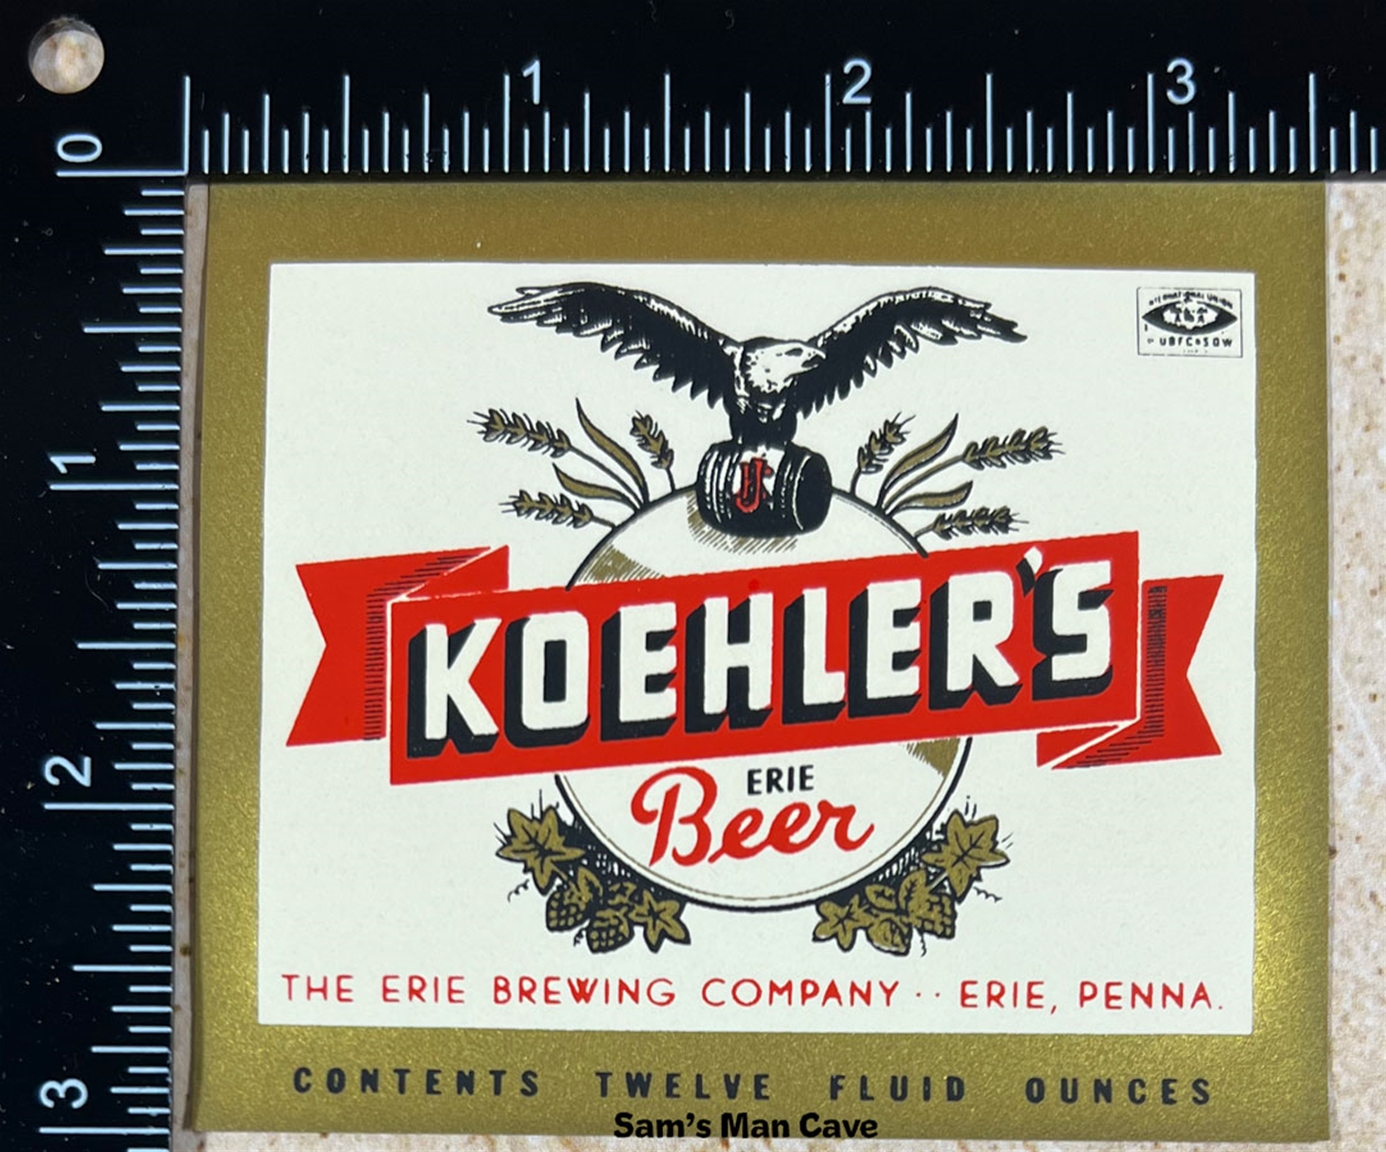 Koehler Beer Label